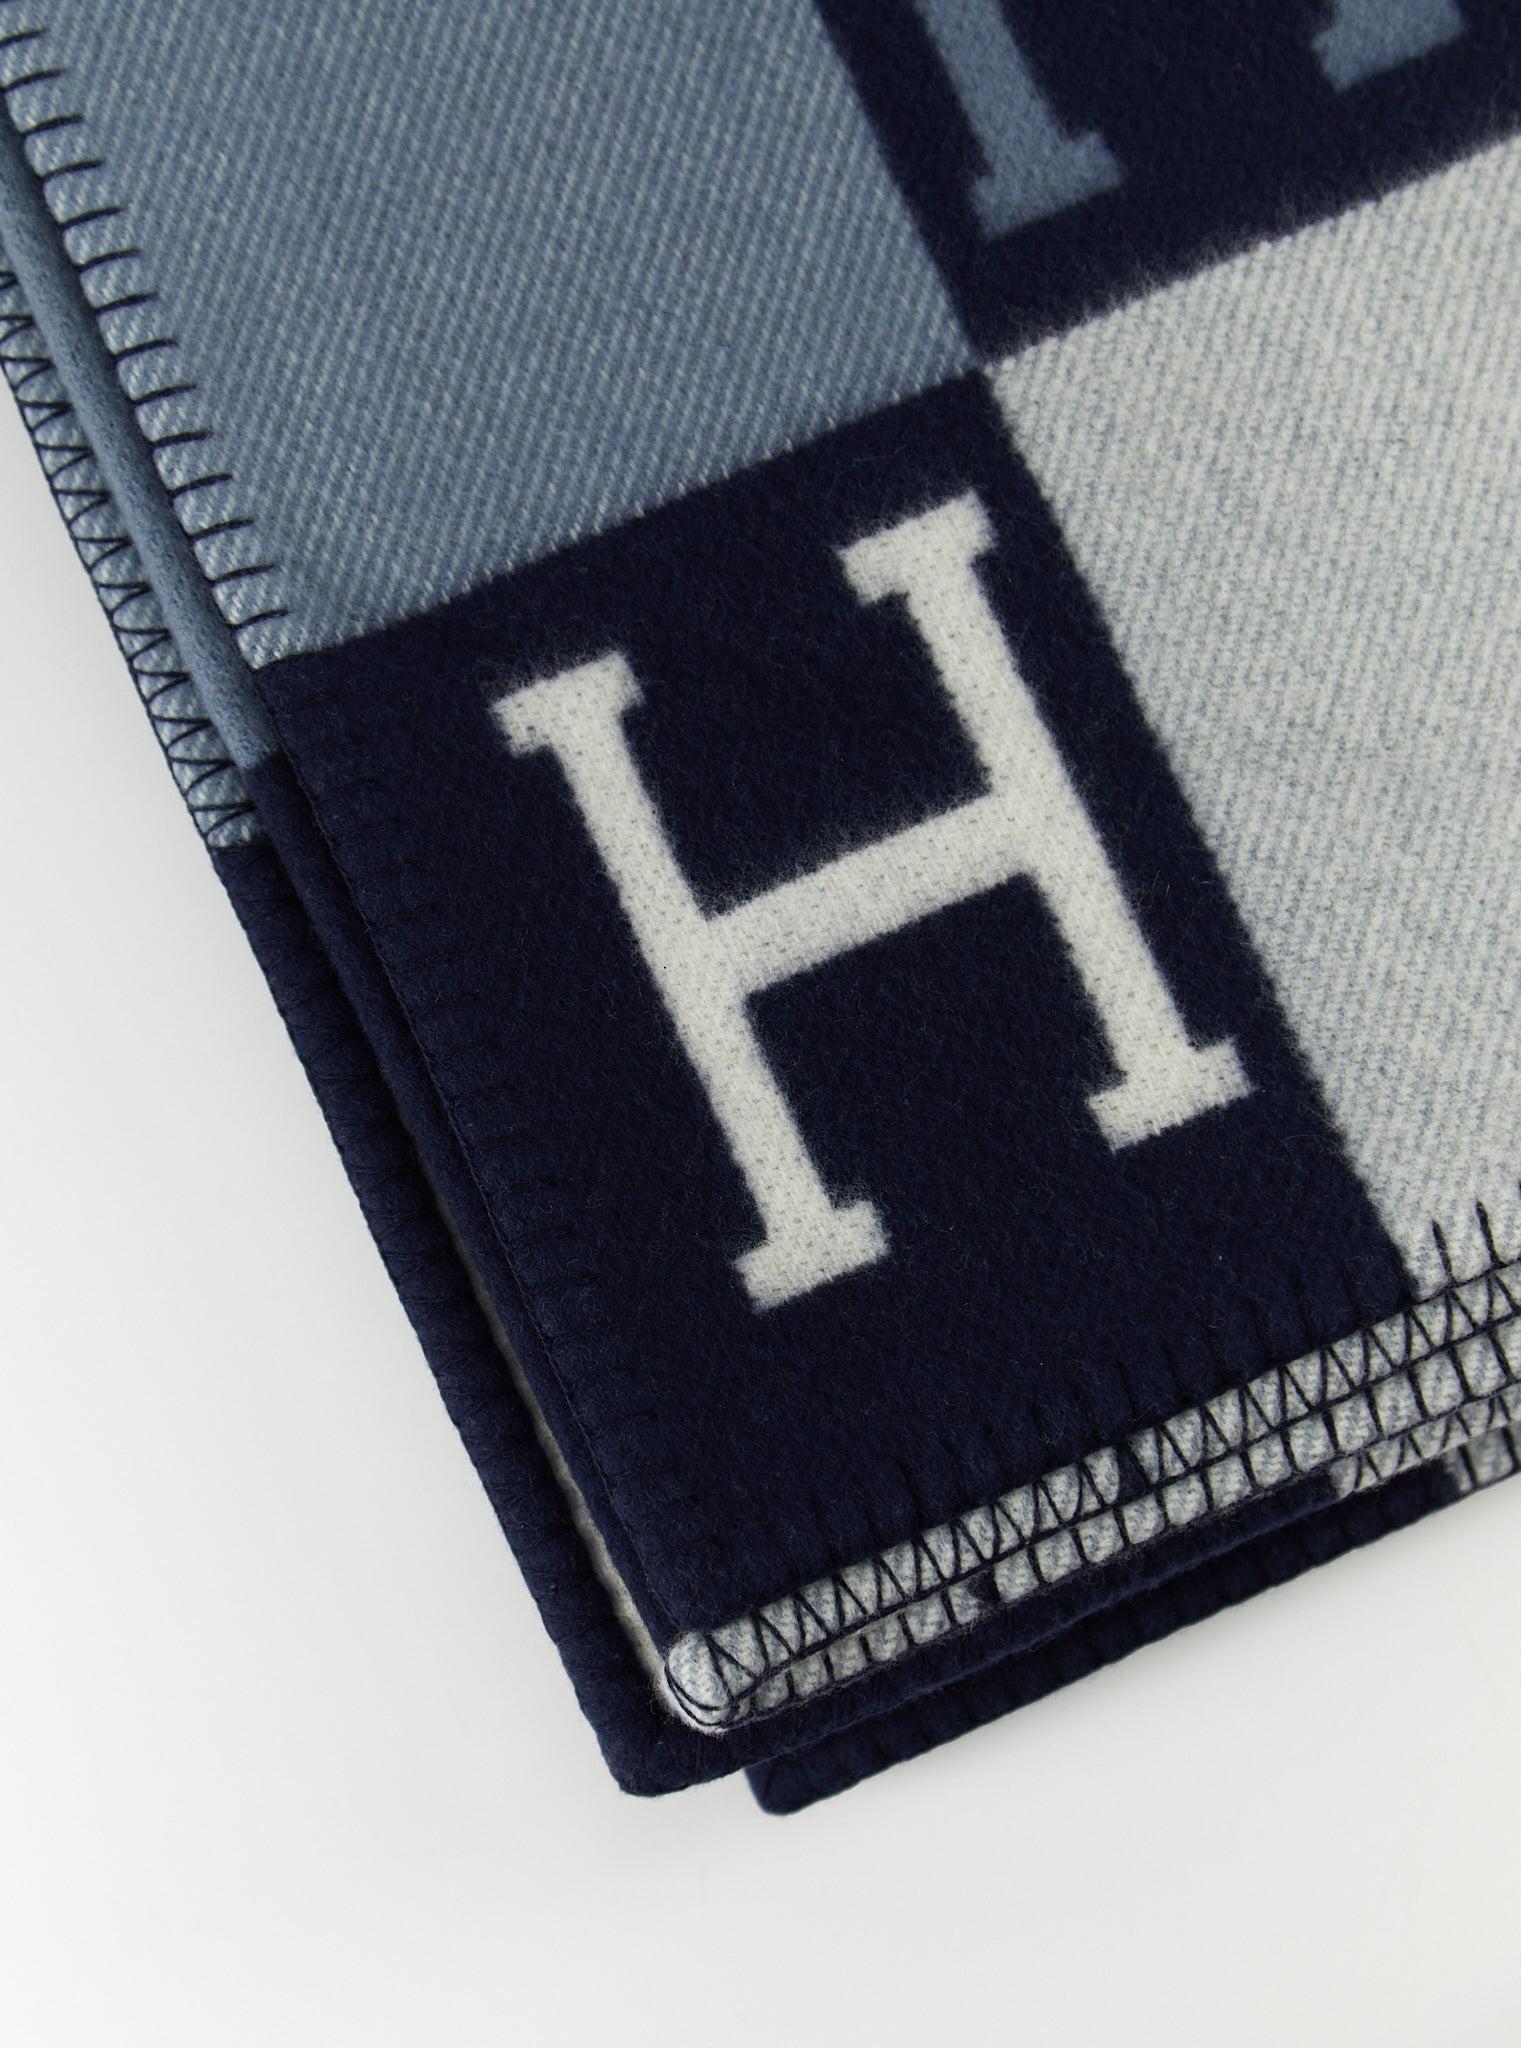 Hermès Avalon III blanket in Merinos wool and cashmere (90% Merino wool, 10% Cashmere)

Ecru & Caban Blue

Made in Great Britain

Dimensions: L 135 x H 170 cm